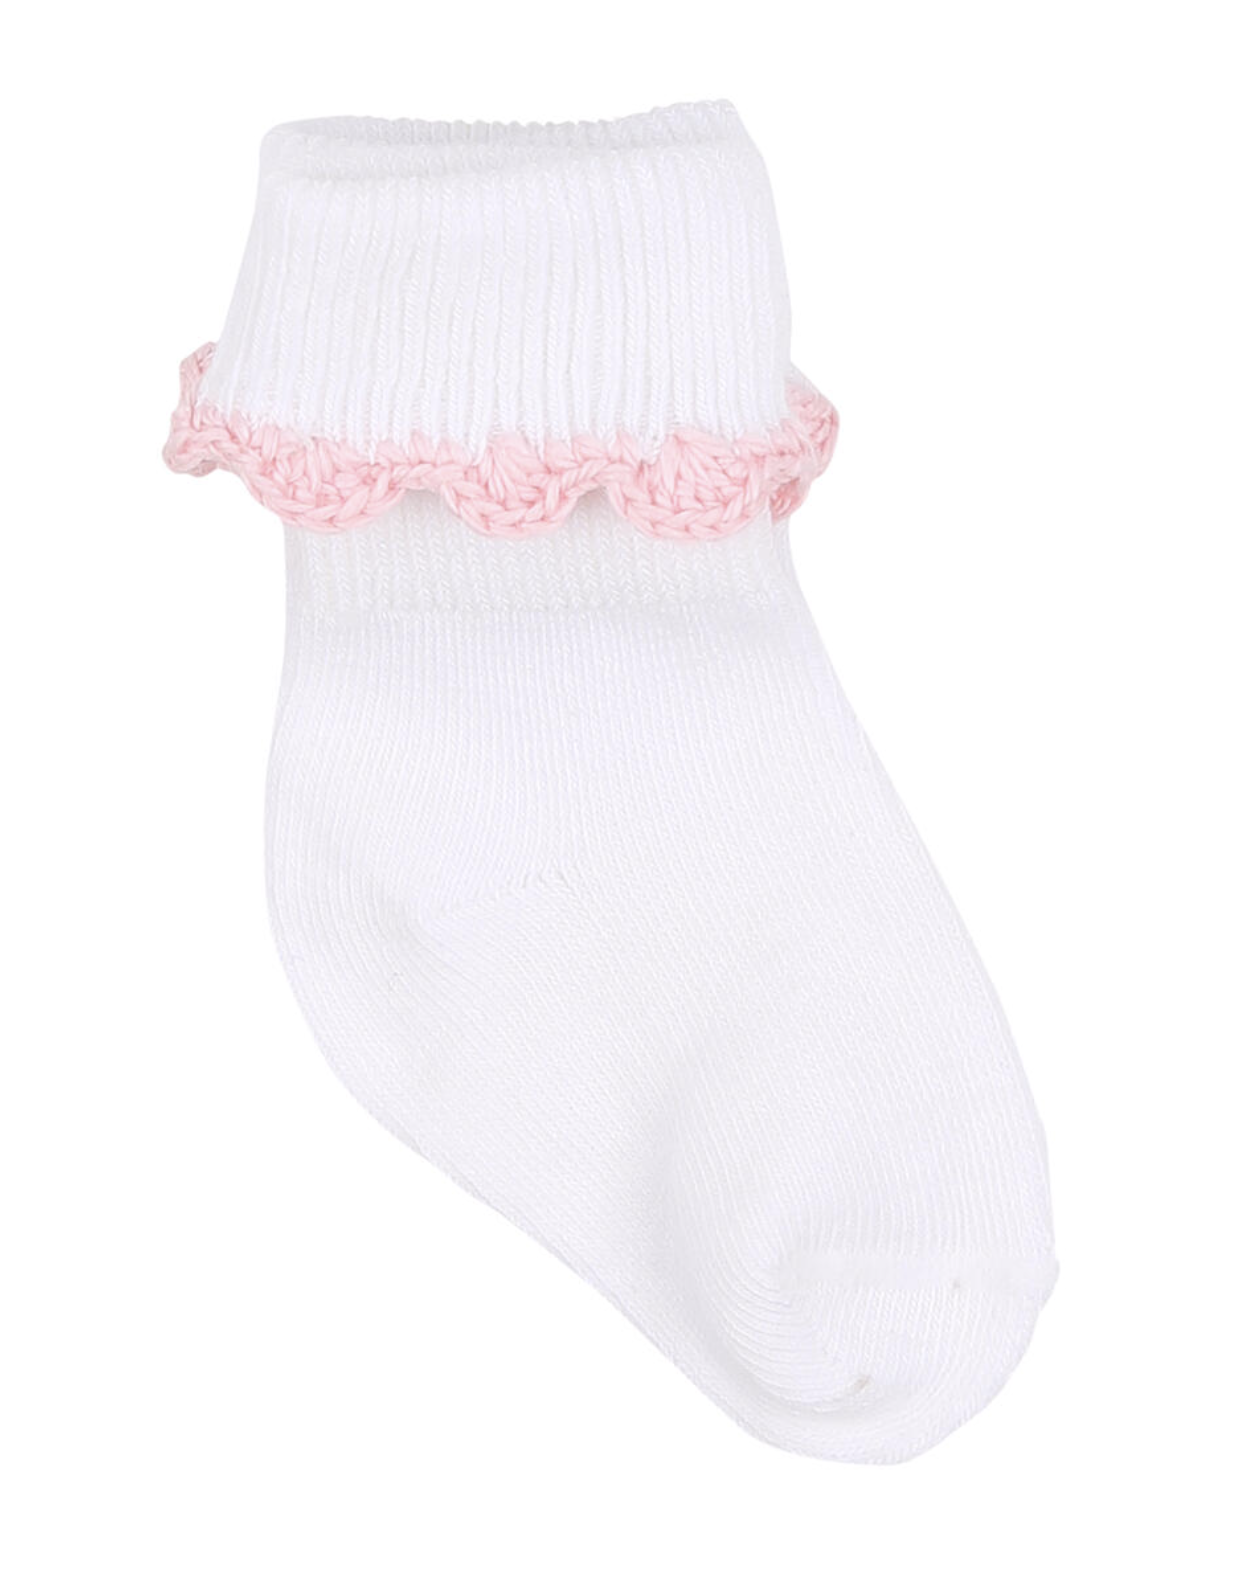 MB Baby Joy Emb Socks Pink